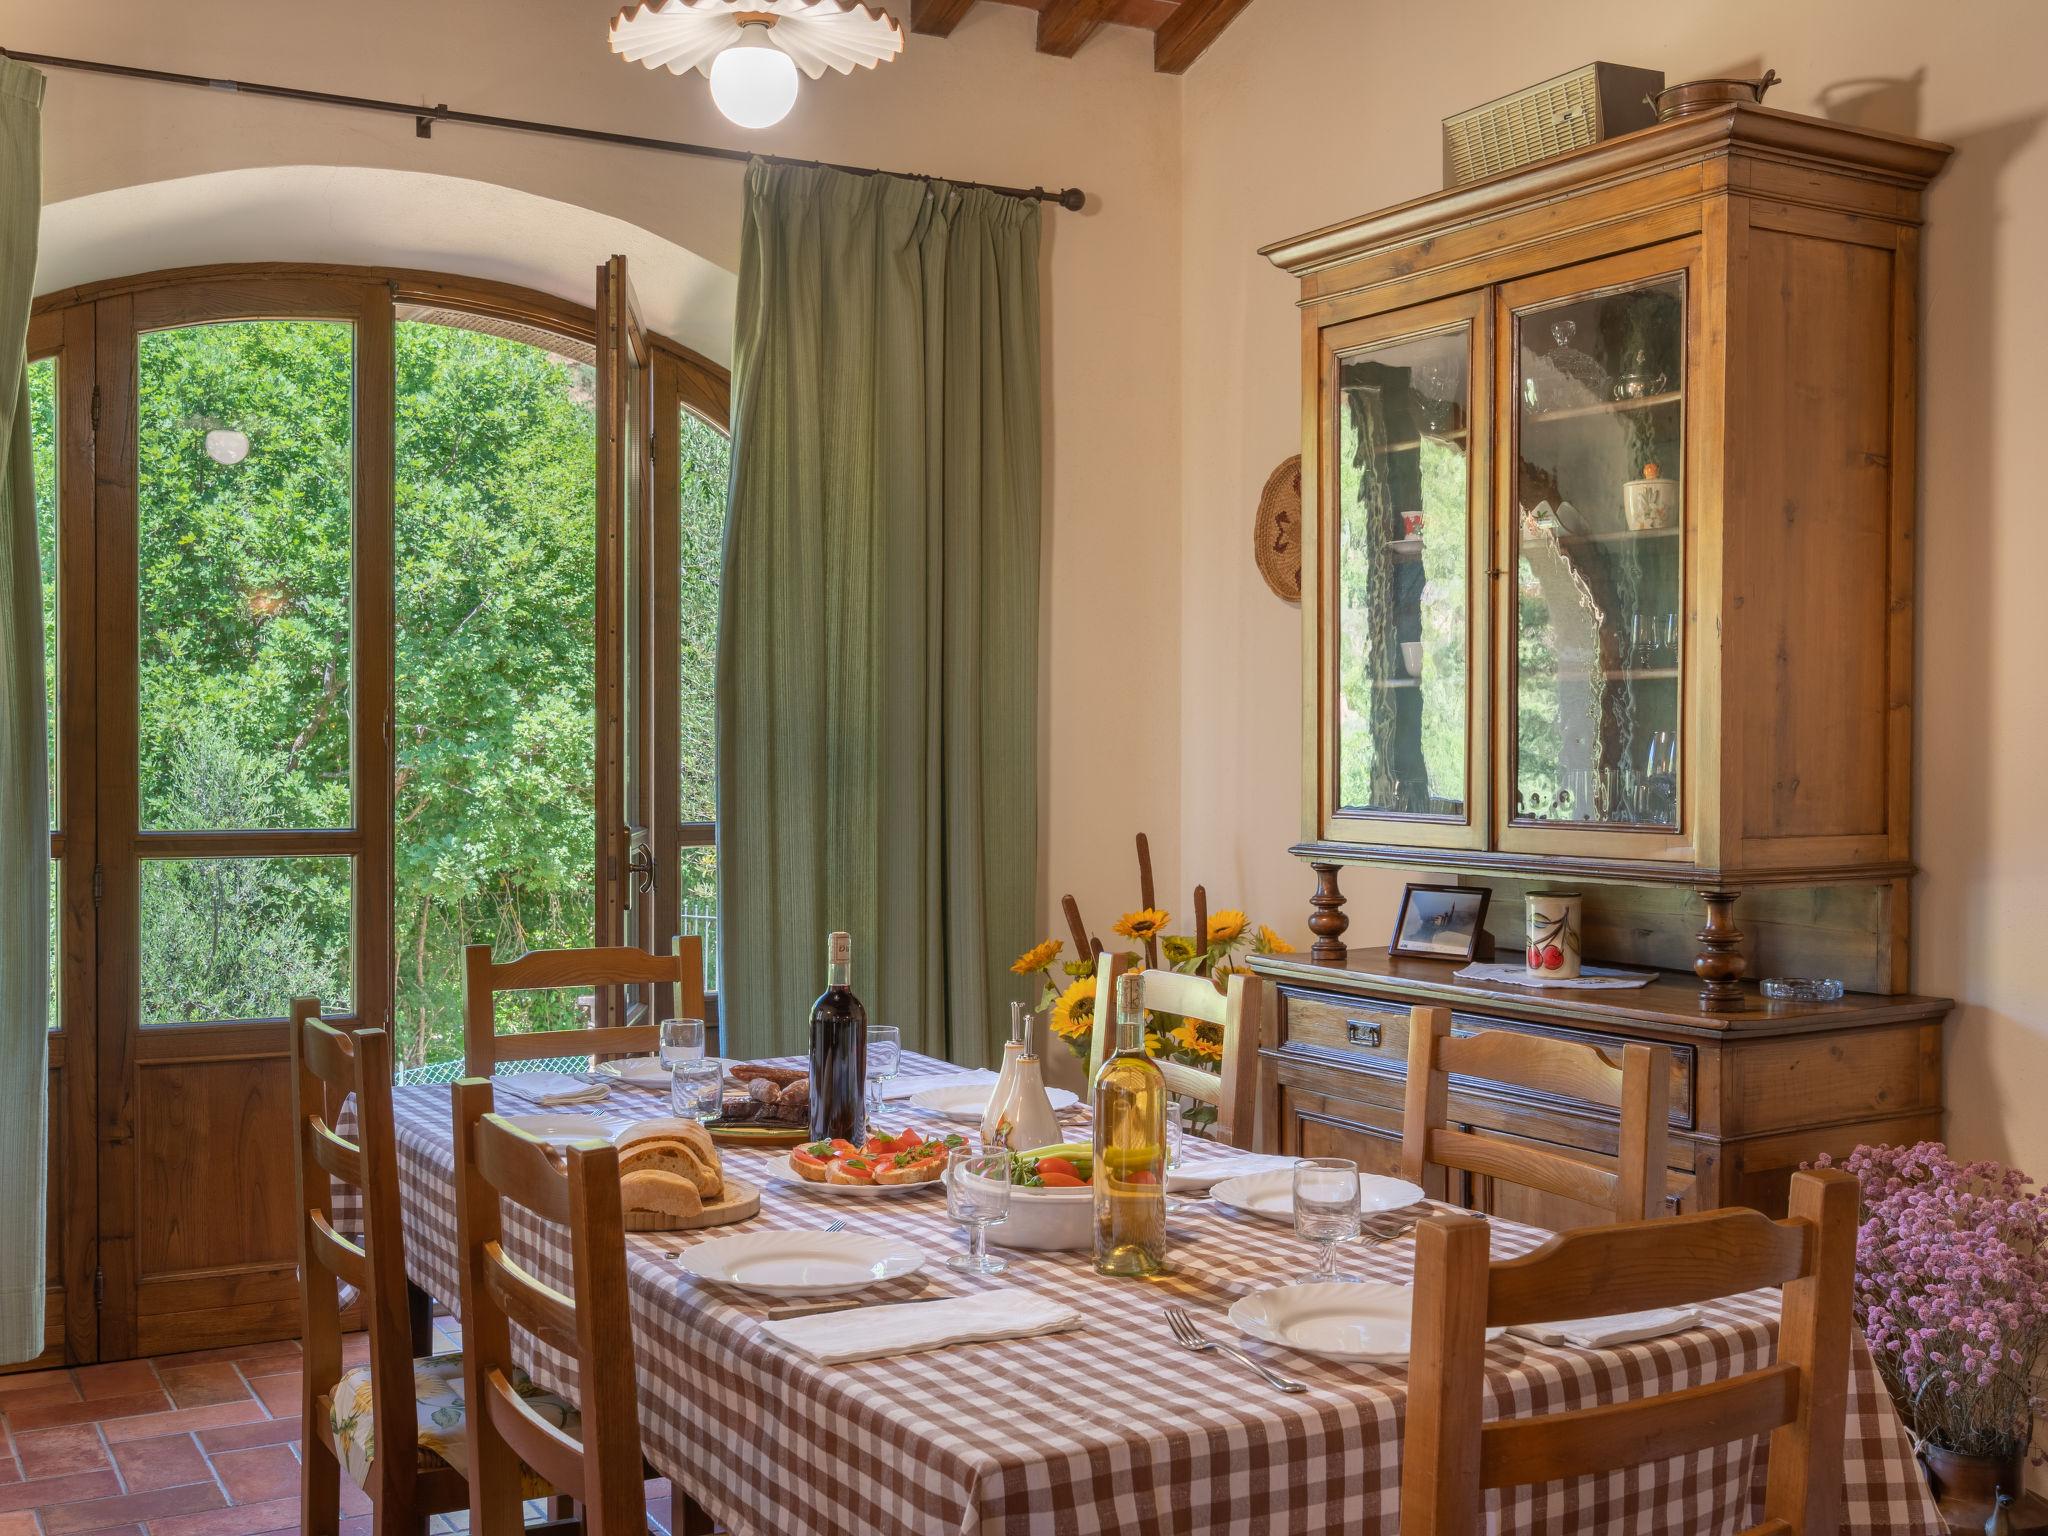 Photo 11 - Maison de 2 chambres à Castiglion Fiorentino avec piscine privée et terrasse